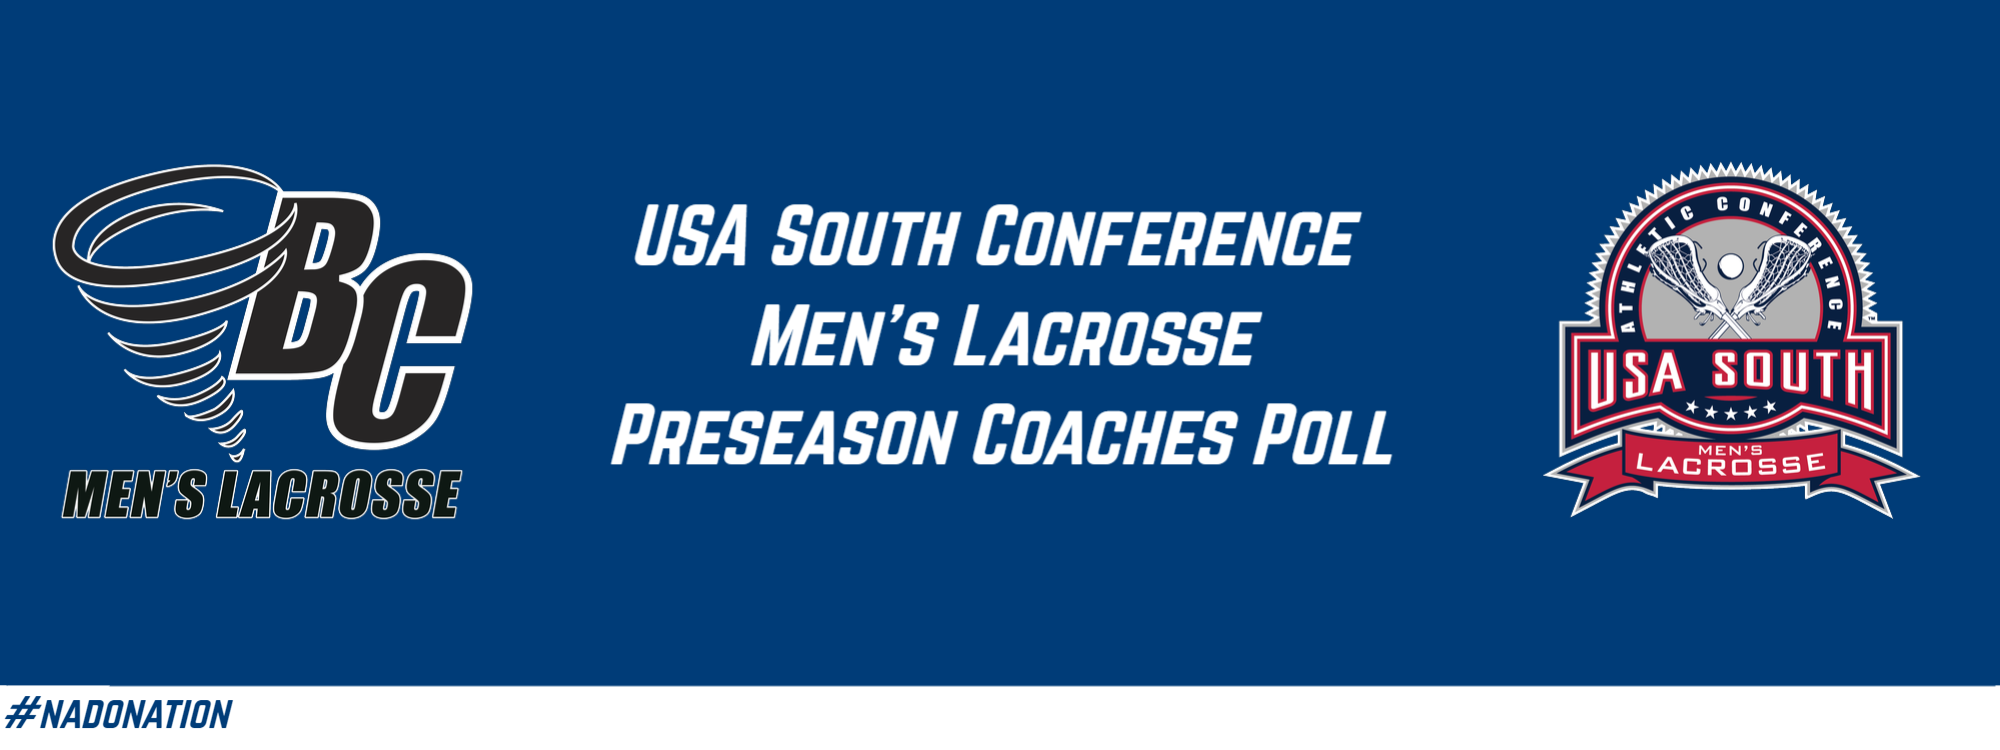 Men’s Lacrosse Preseason Poll Released by USA South